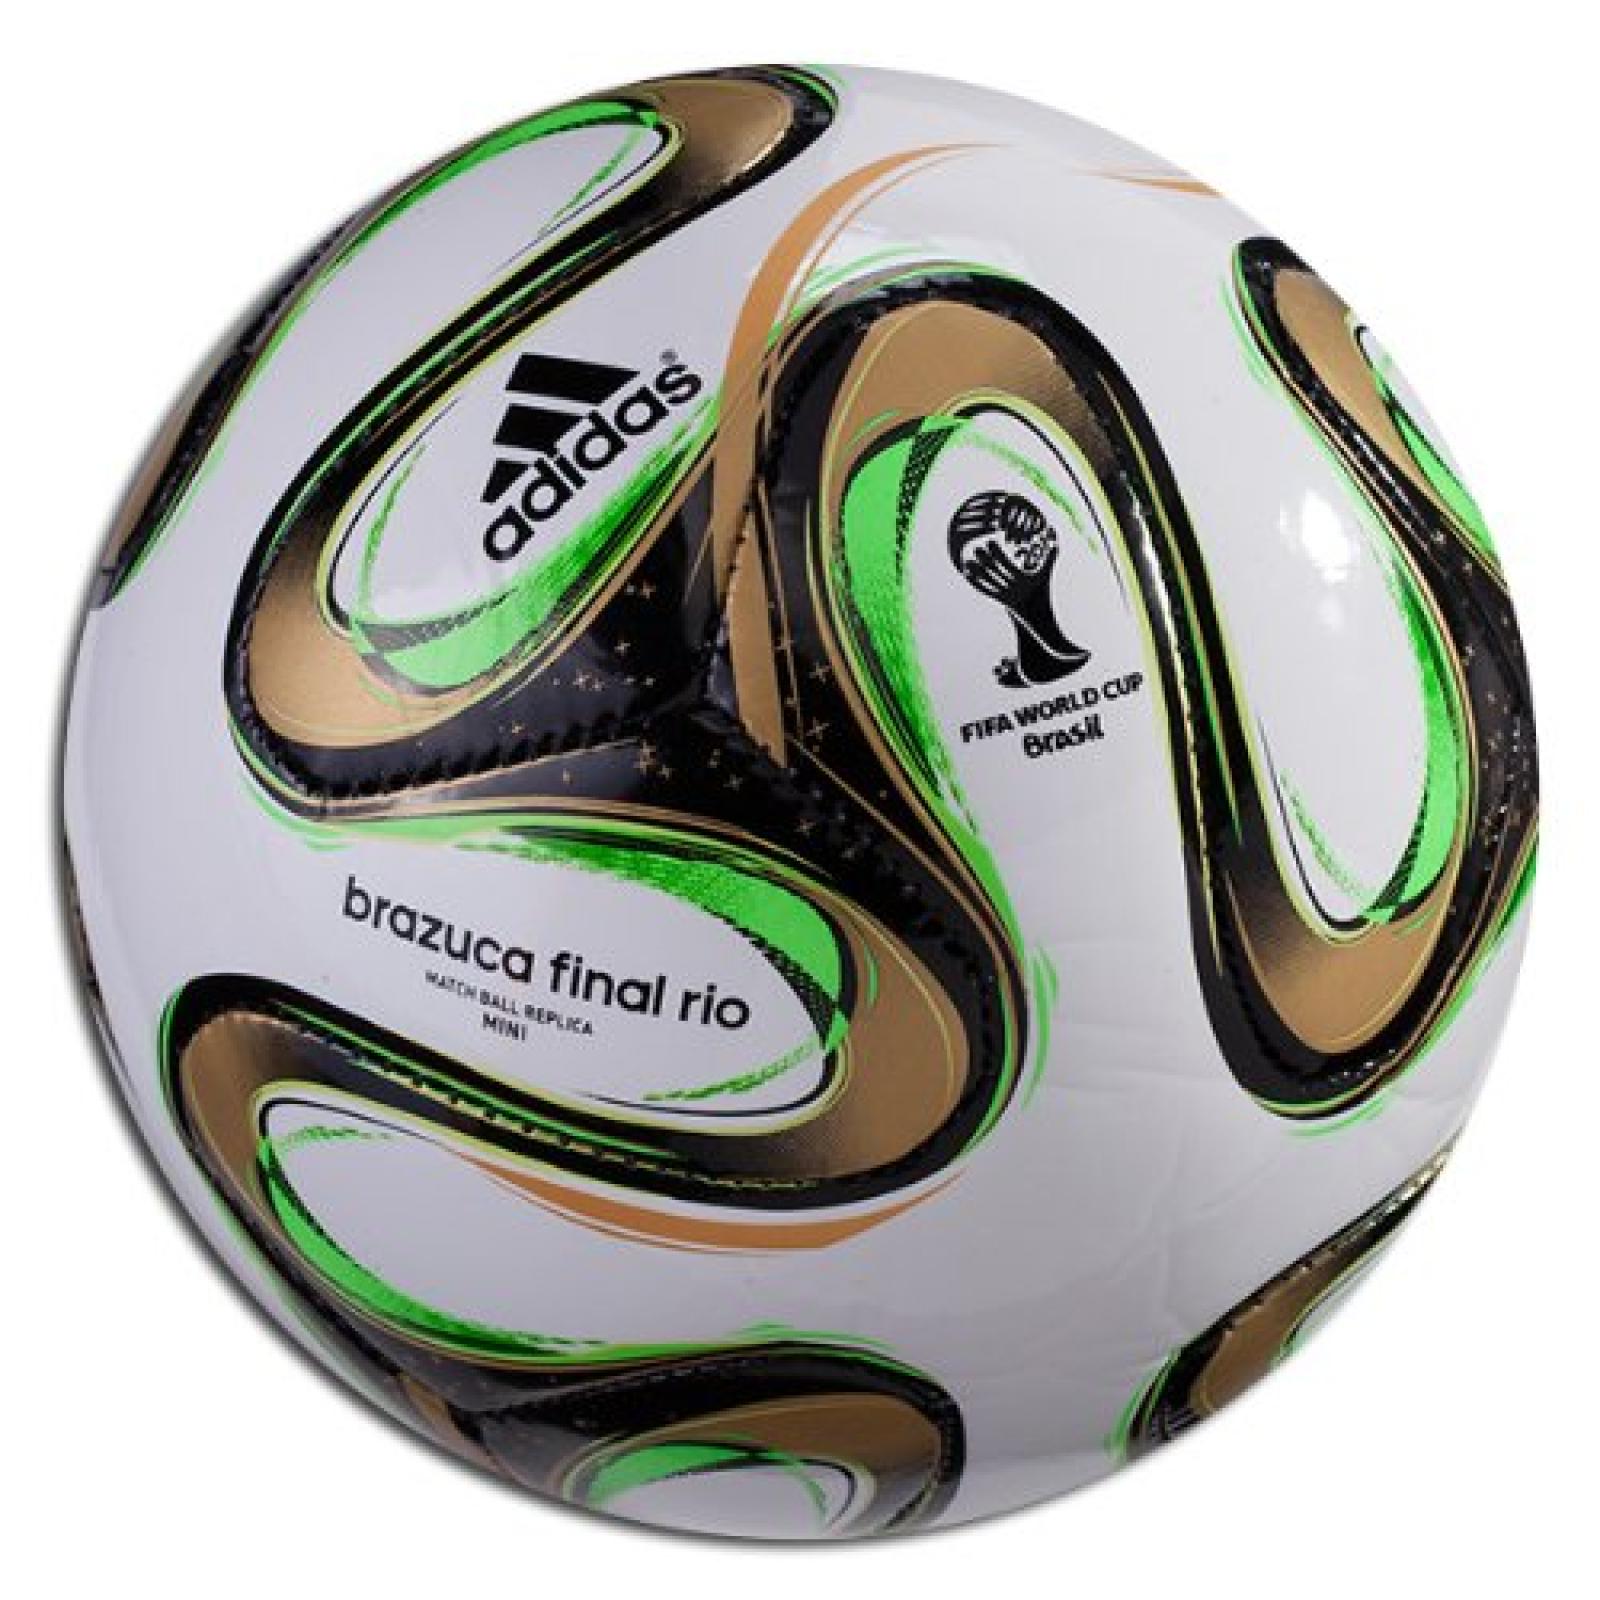 https://www.badmintonbay.com/image/cache/data/Adidas/Football/Adidas-Brazuca-Gold-Mini-Football-2014-1600x1600.jpg